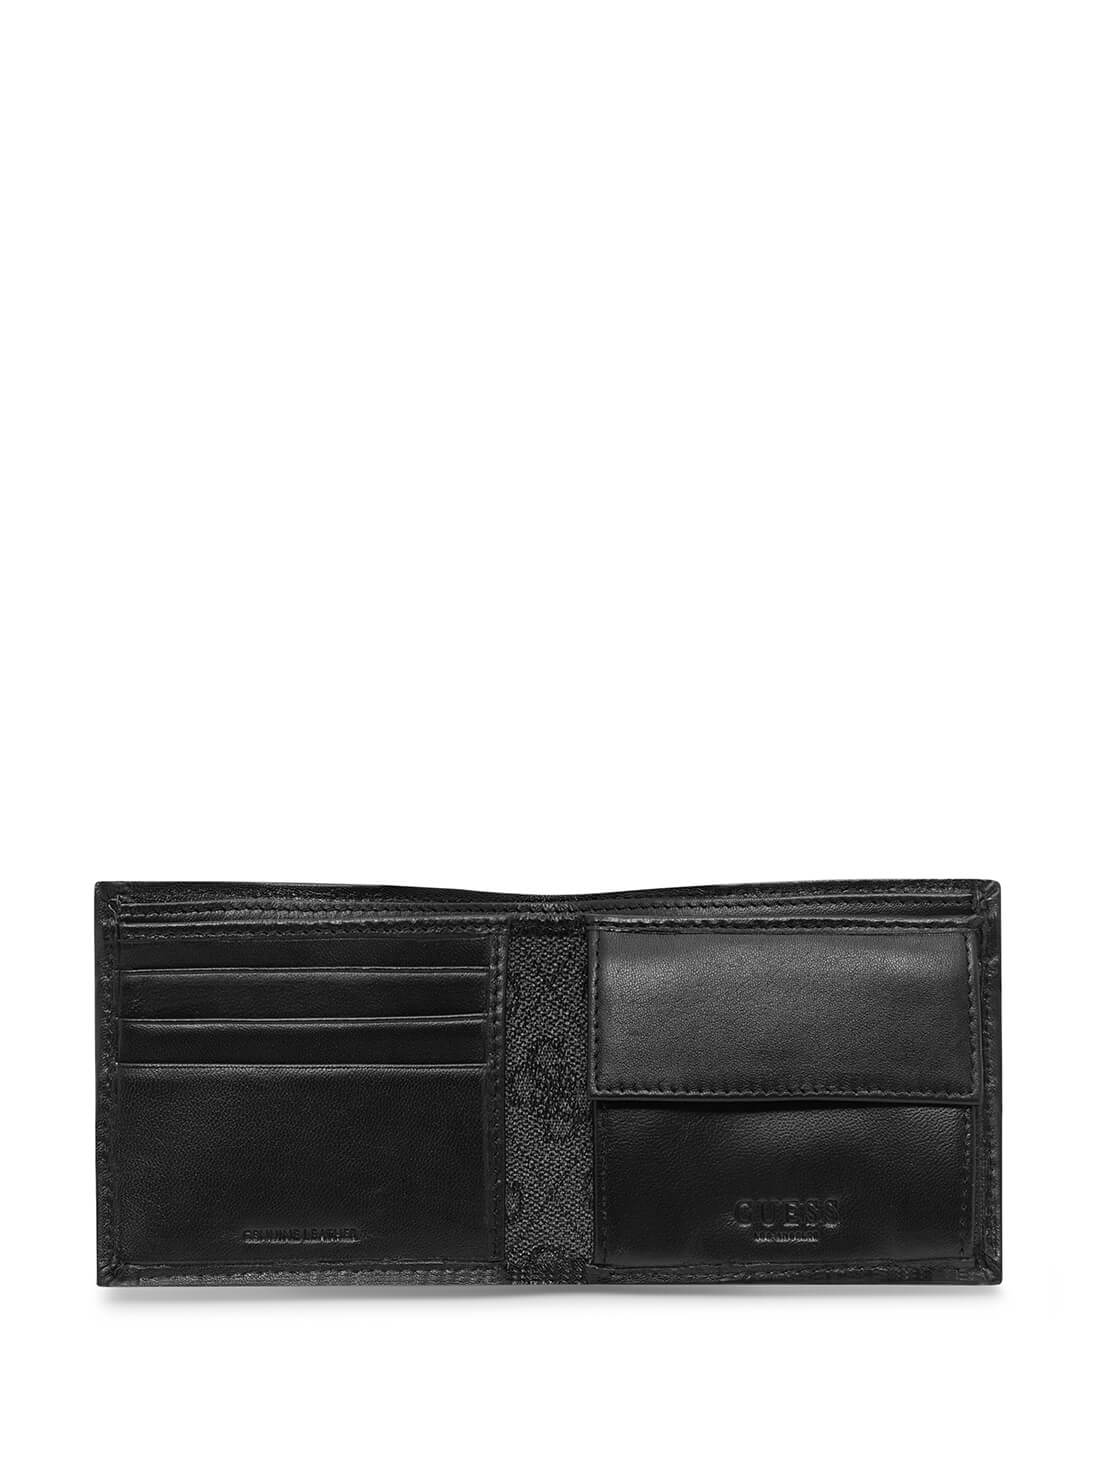 GUESS Men's Black Quattro G Slimfold Wallet 31GUE13217 Inside View